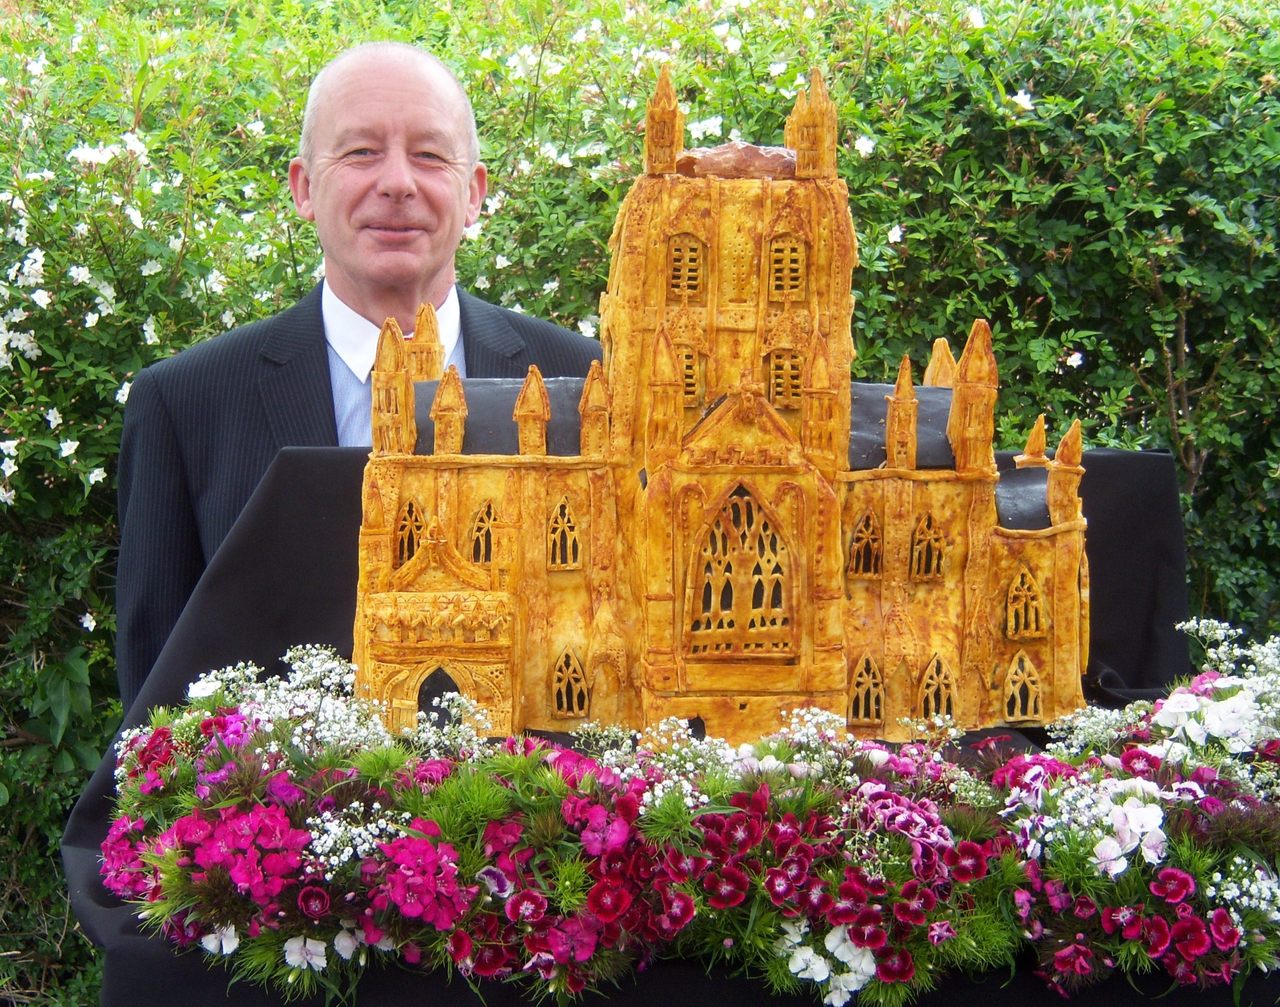 The Gloucester Cathedral-shaped lamprey pie for Queen Elizabeth II's Diamond Jubilee